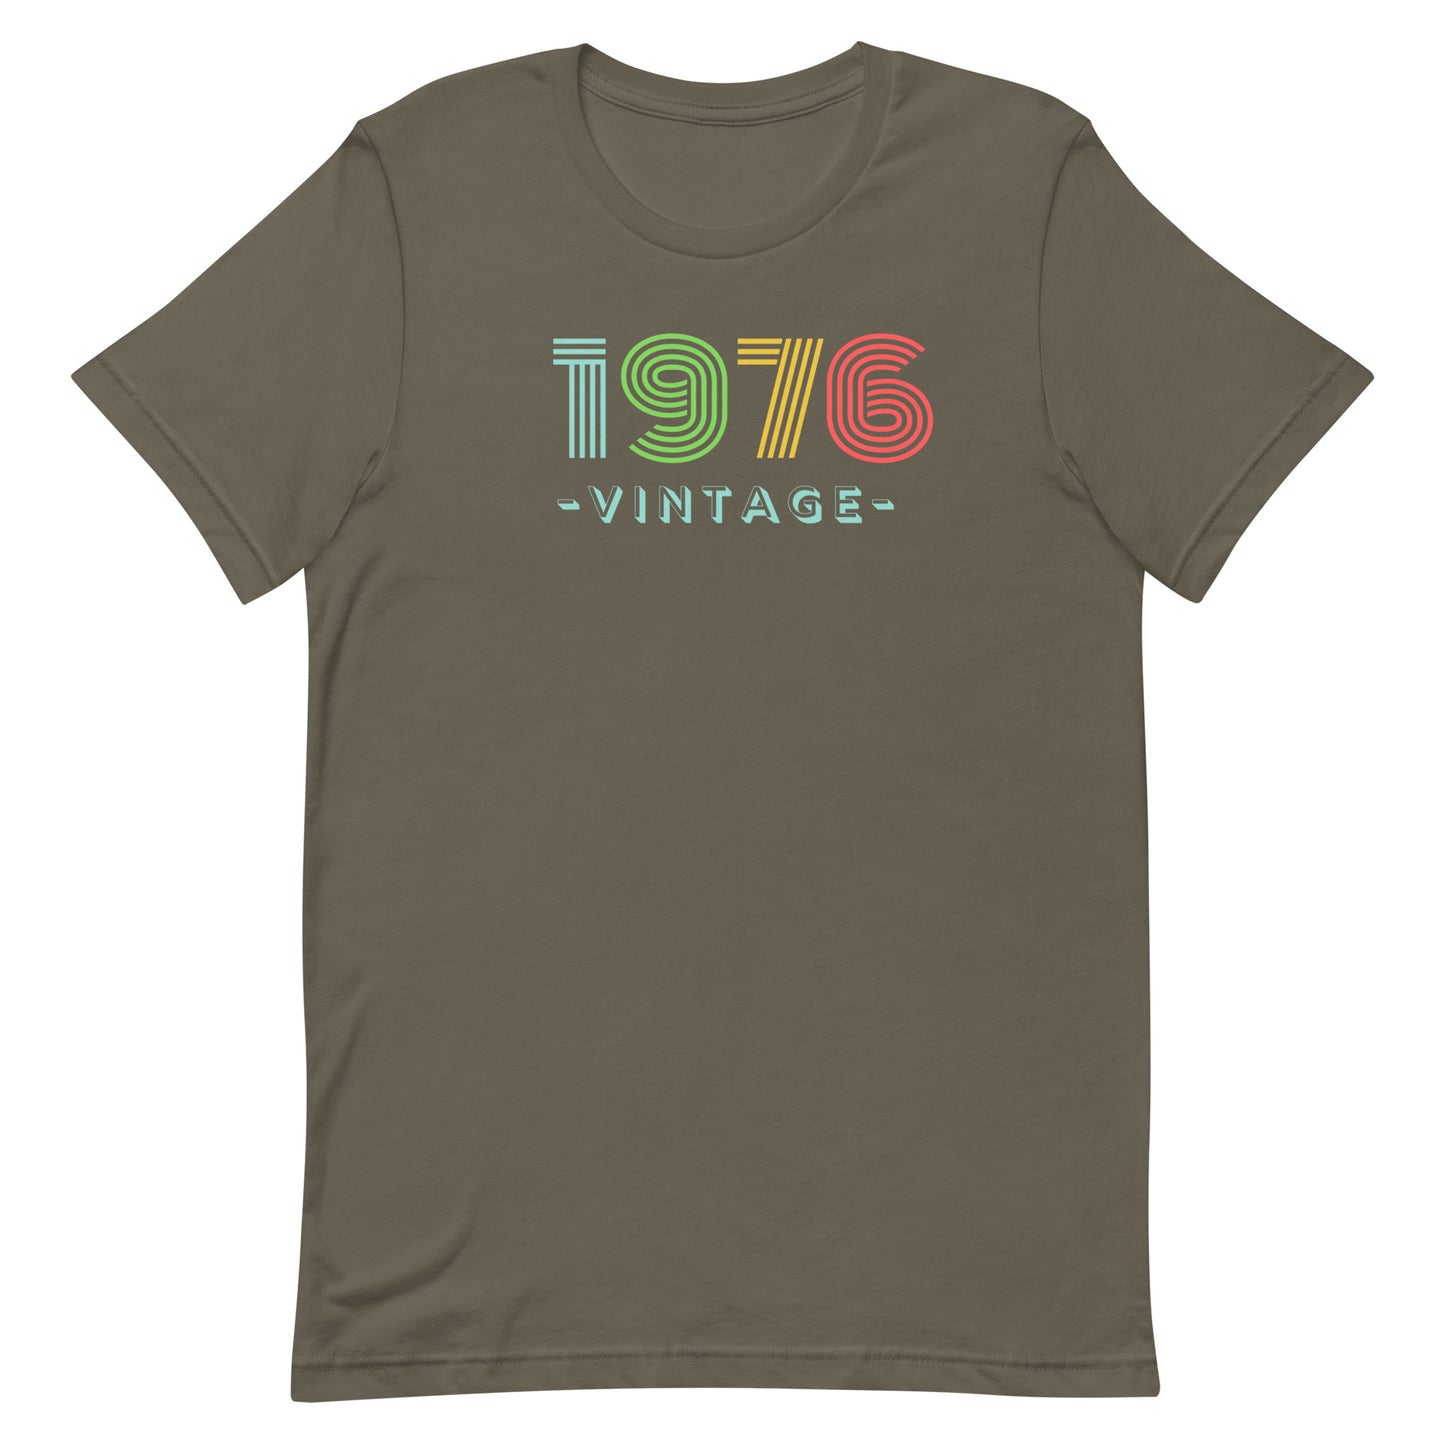 1976 Vintage. Unisex t-shirt